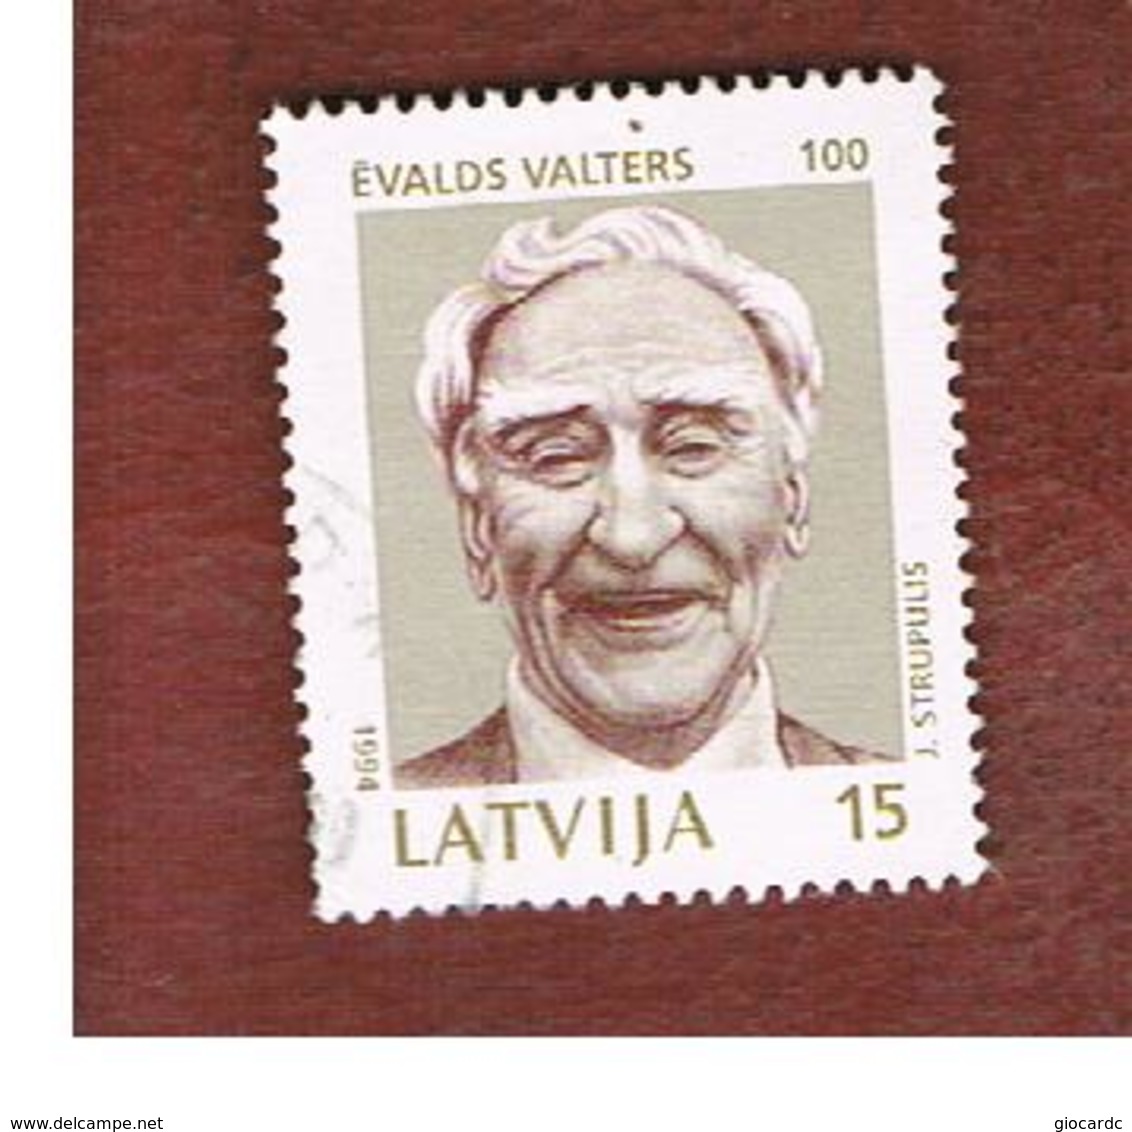 LETTONIA (LATVIA)   -  SG 383  -  1994 E. VALTERS, ACTOR -   USED - Lettonia